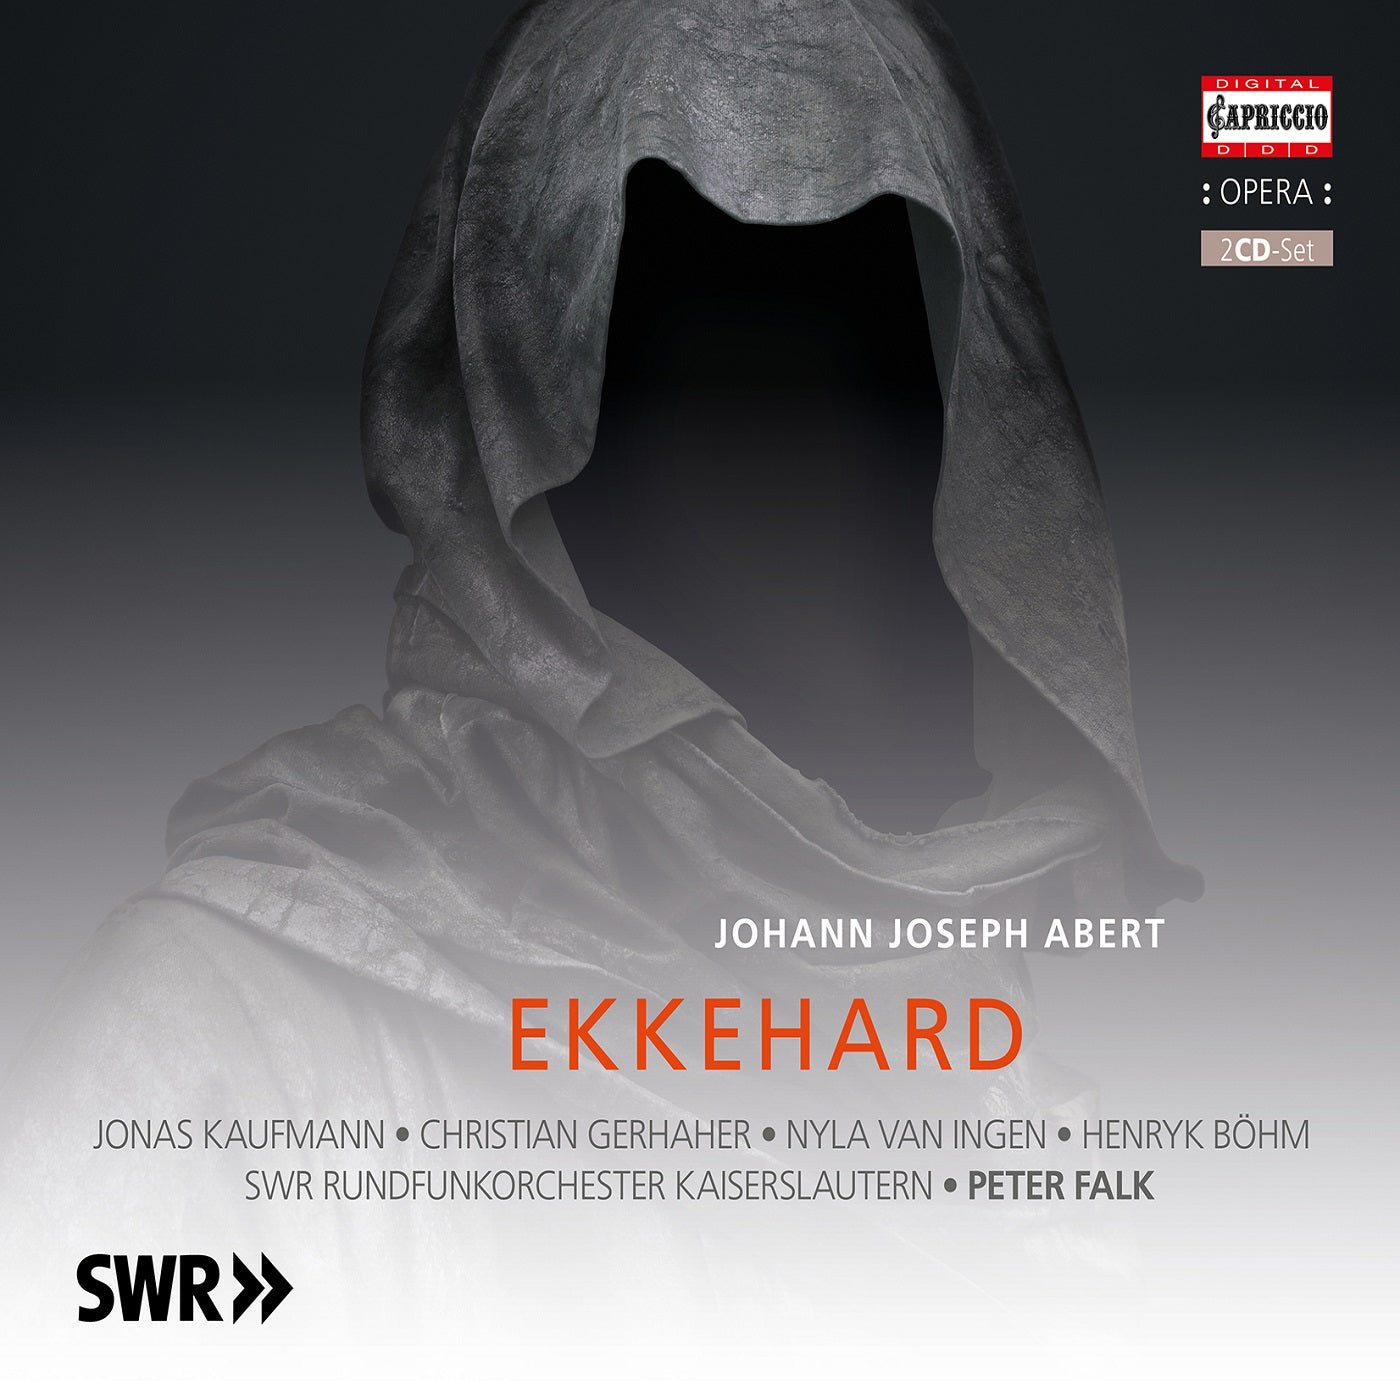 Abert: Ekkhard / Falk, Southwest German Radio Orchestra Kaiserlautern